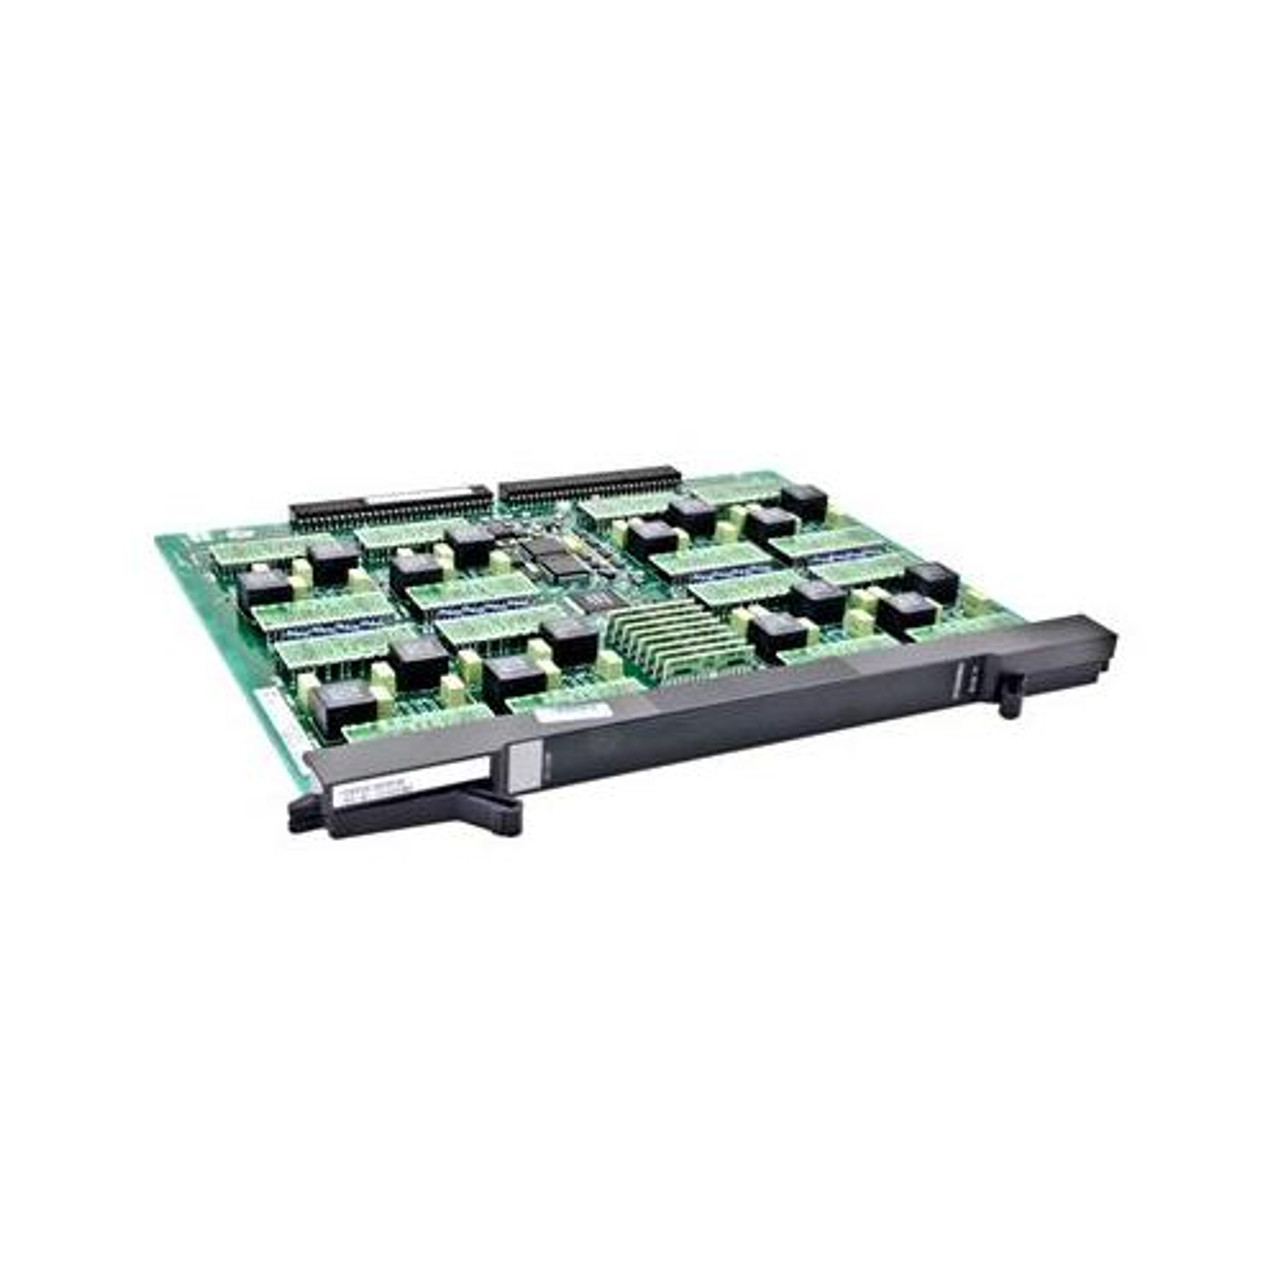 RS32XBC0 Lantronix PCb-330-119 17-port Board Rev.c0